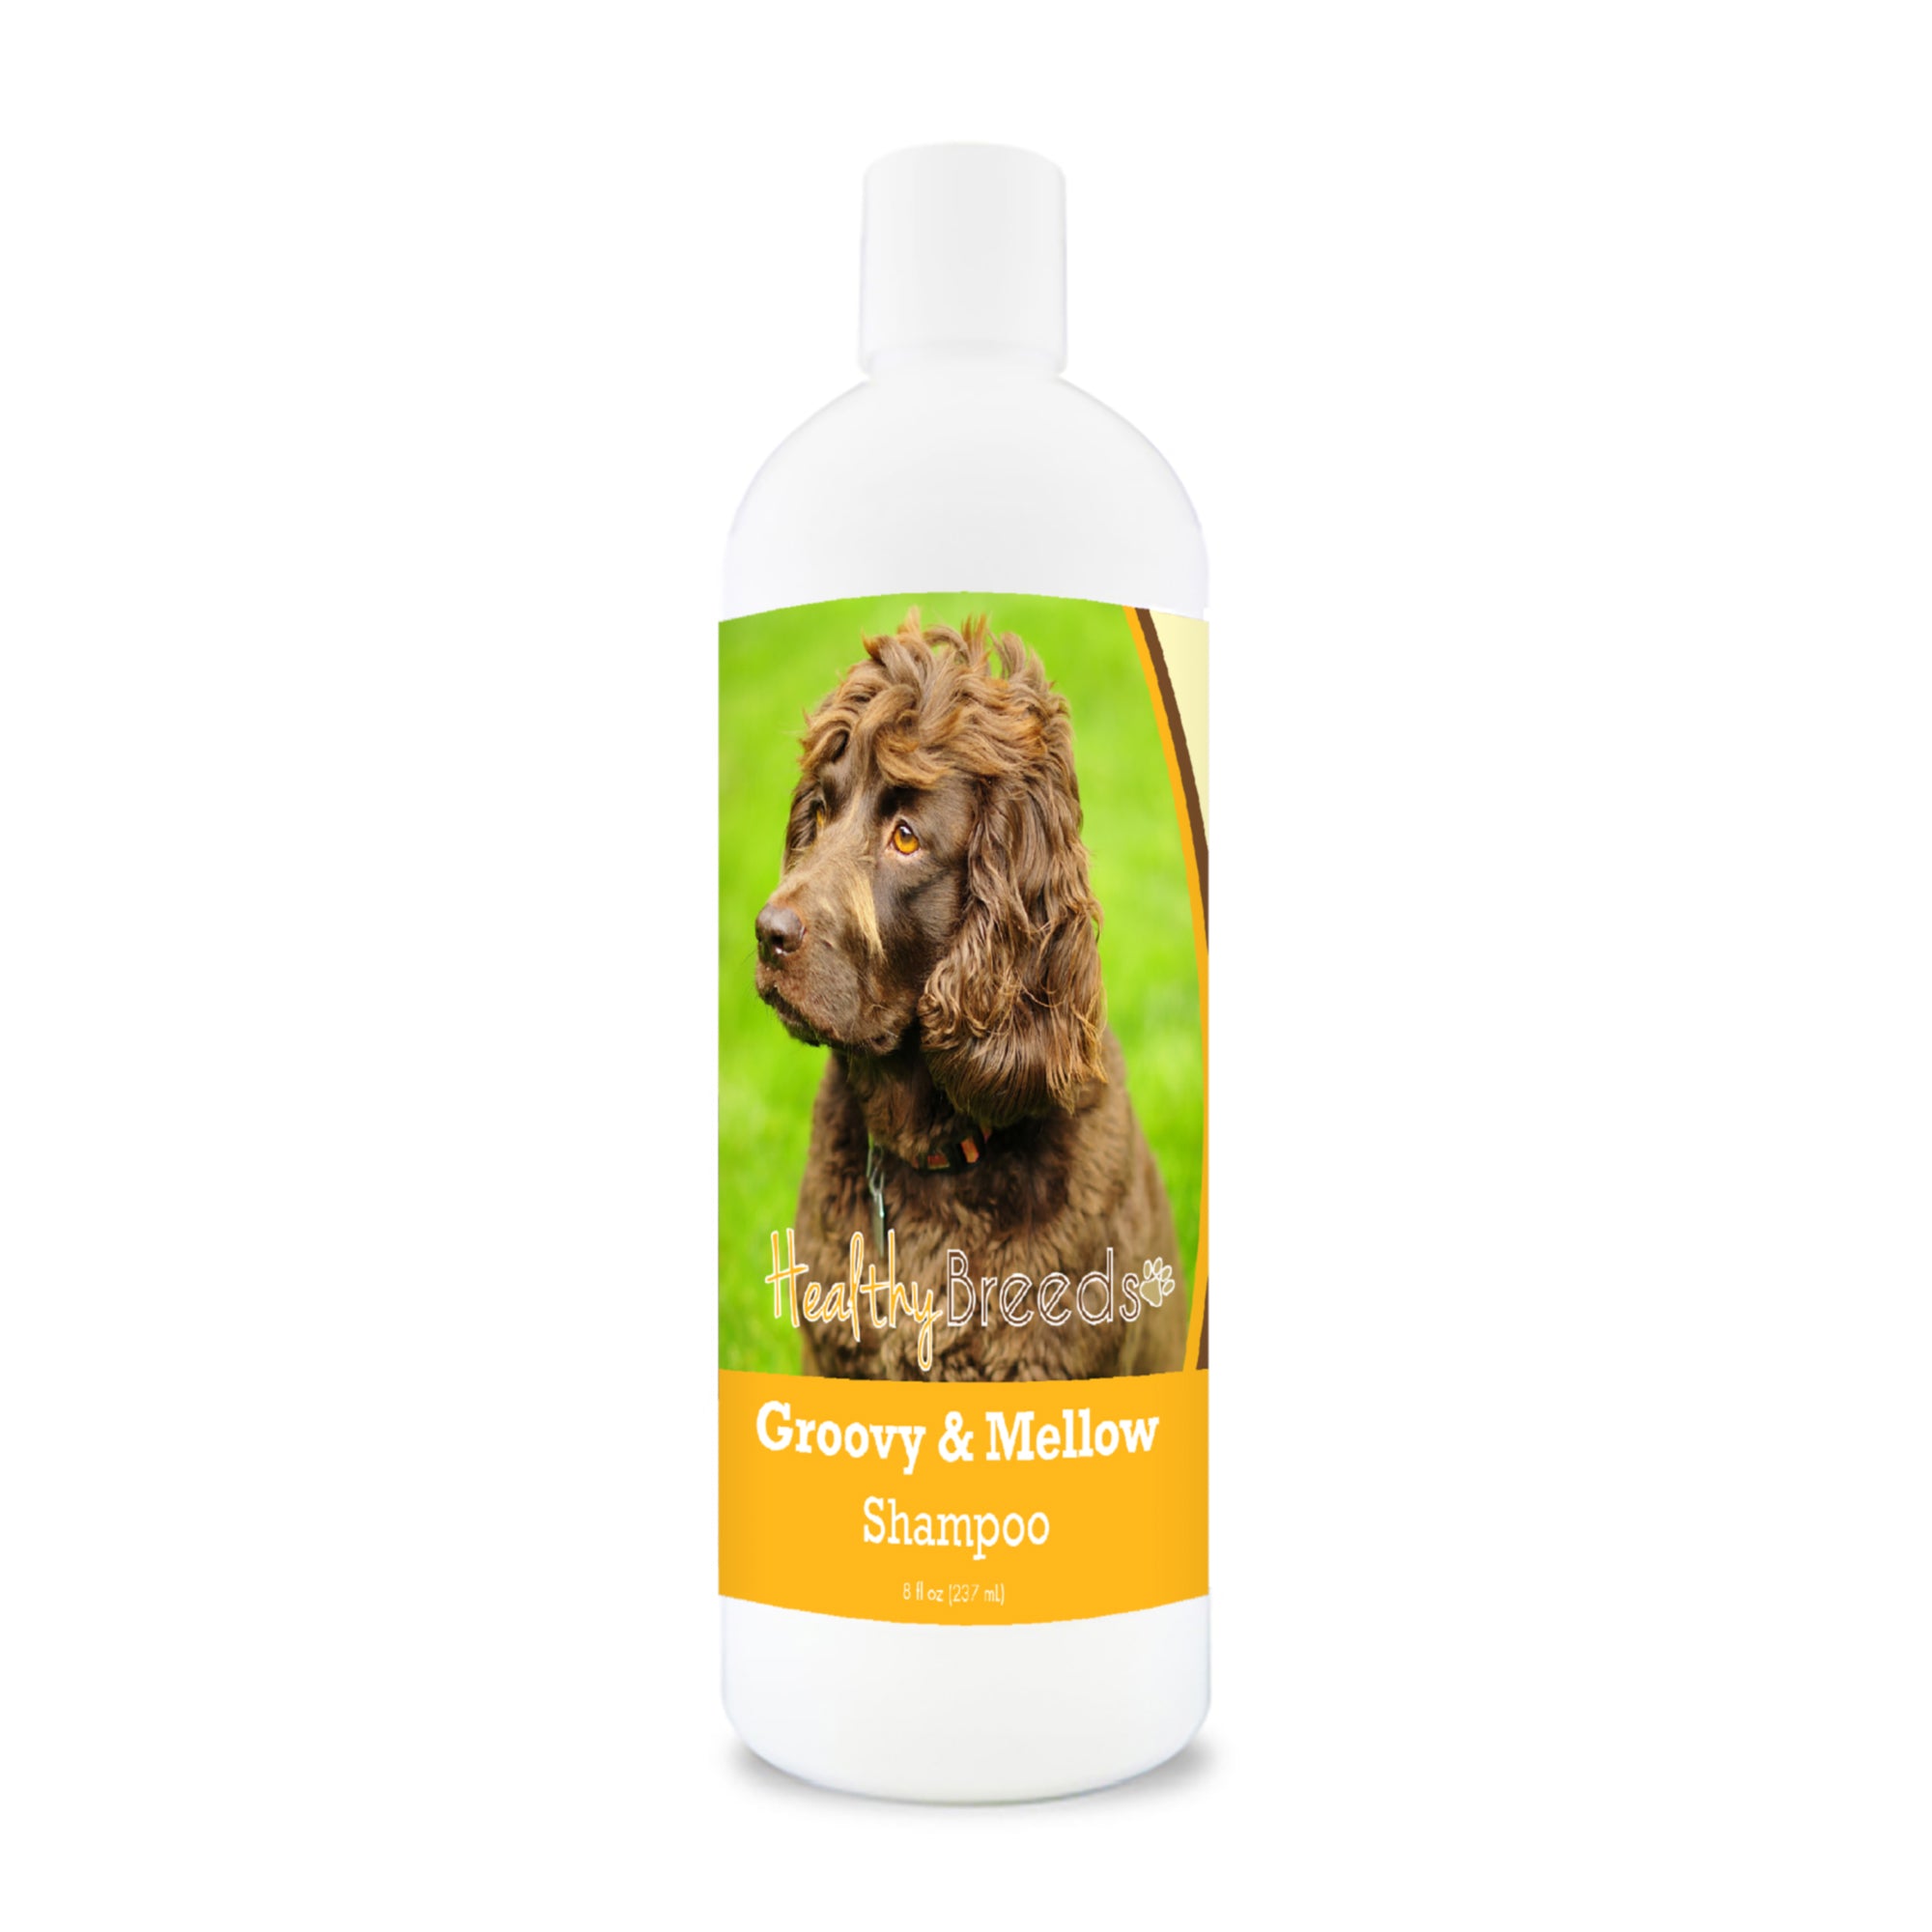 Boykin Spaniel Groovy & Mellow Shampoo 8 oz